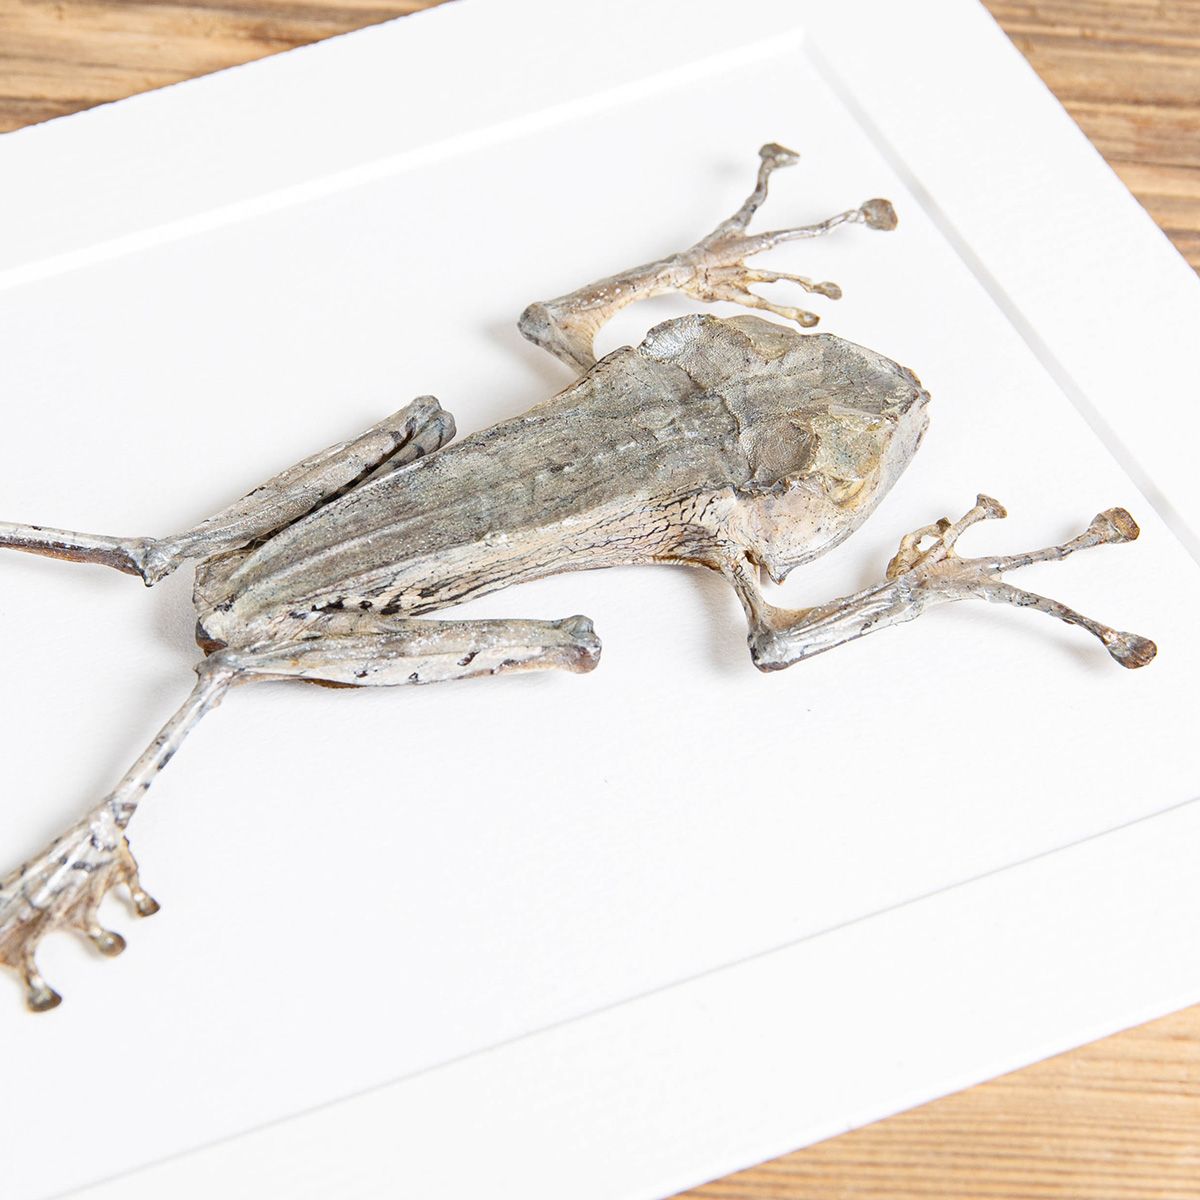 File-eared Tree Frog in Box Frame (Polypedates otilophus)